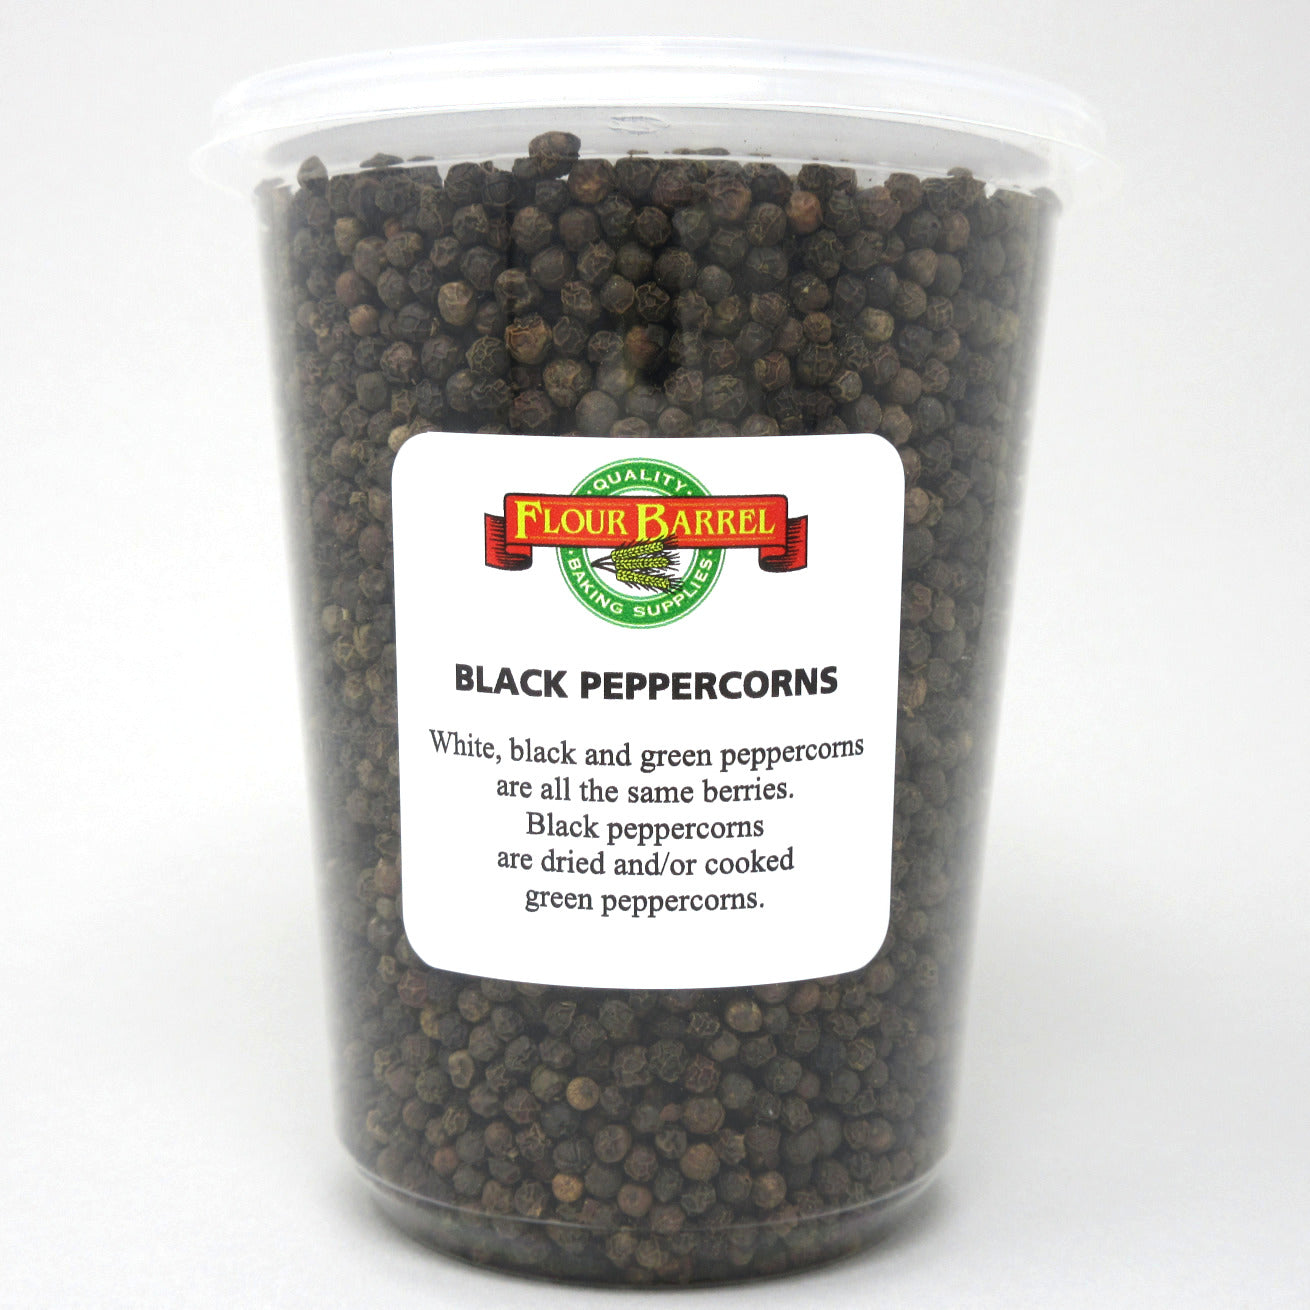 Flour Barrel product image - Black Peppercorns